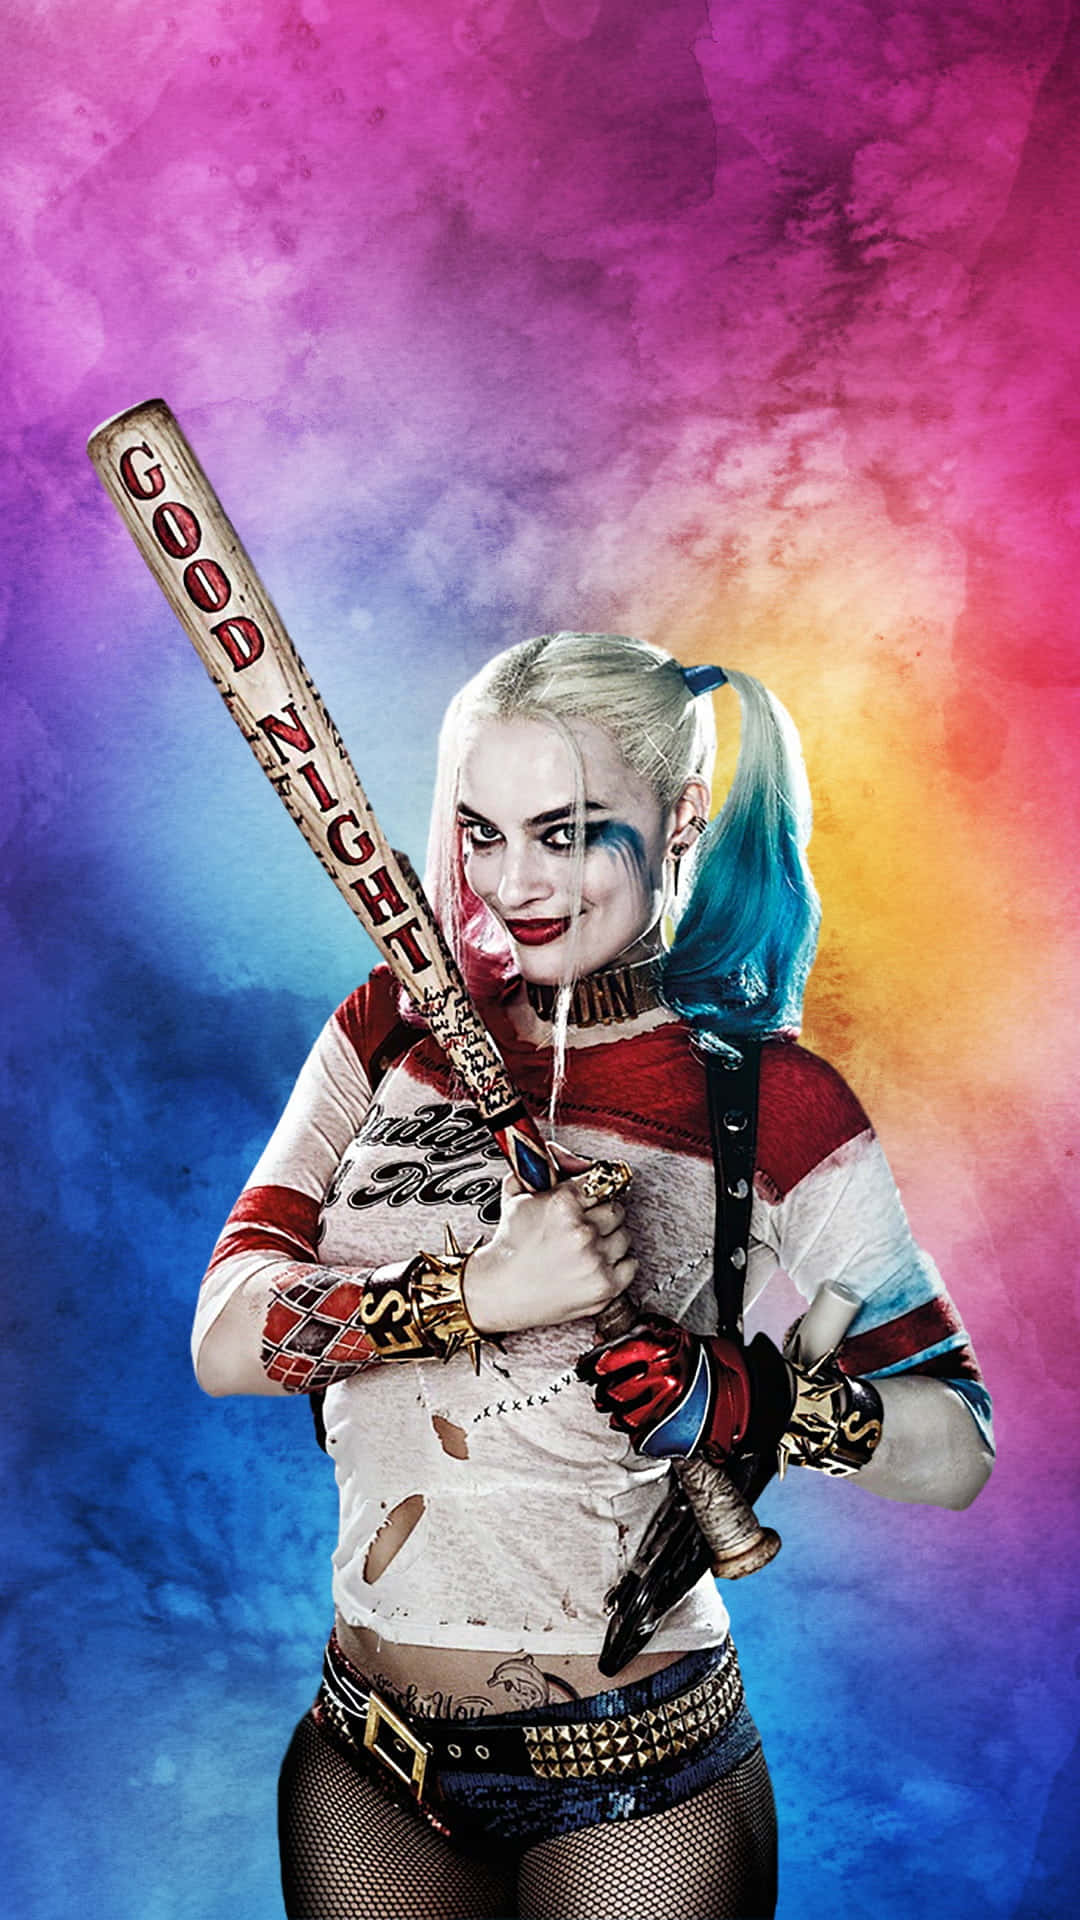 Harley Quinn wielding her signature baseball bat with a fierce expression Wallpaper